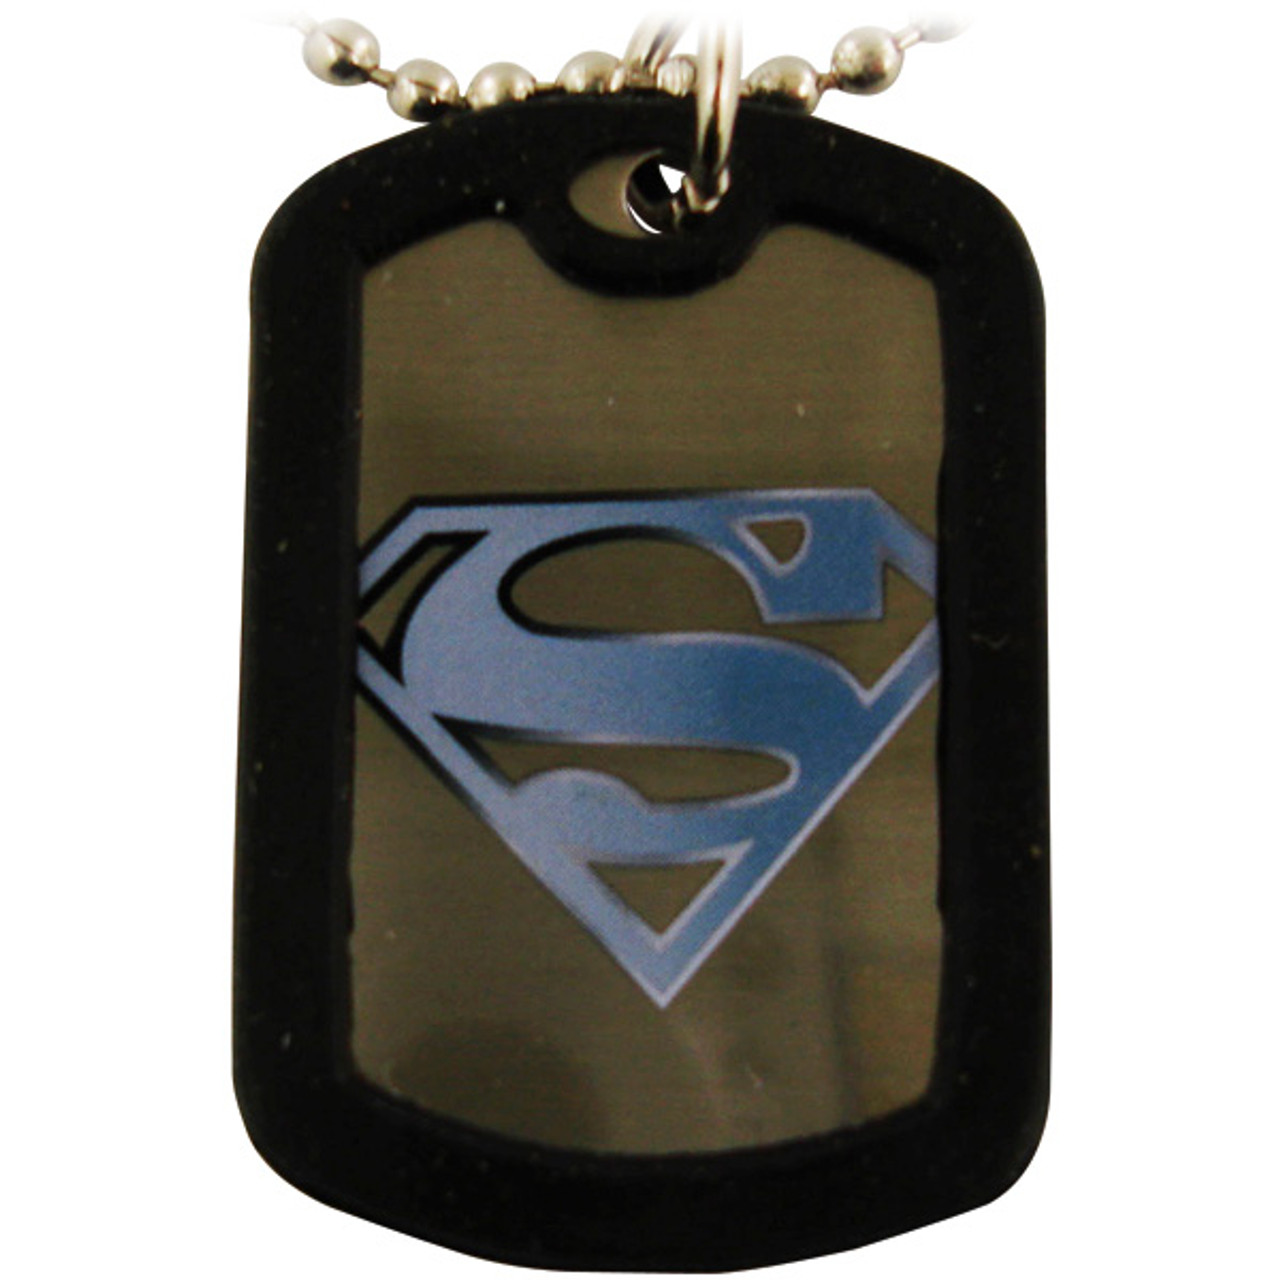 superman dog tag